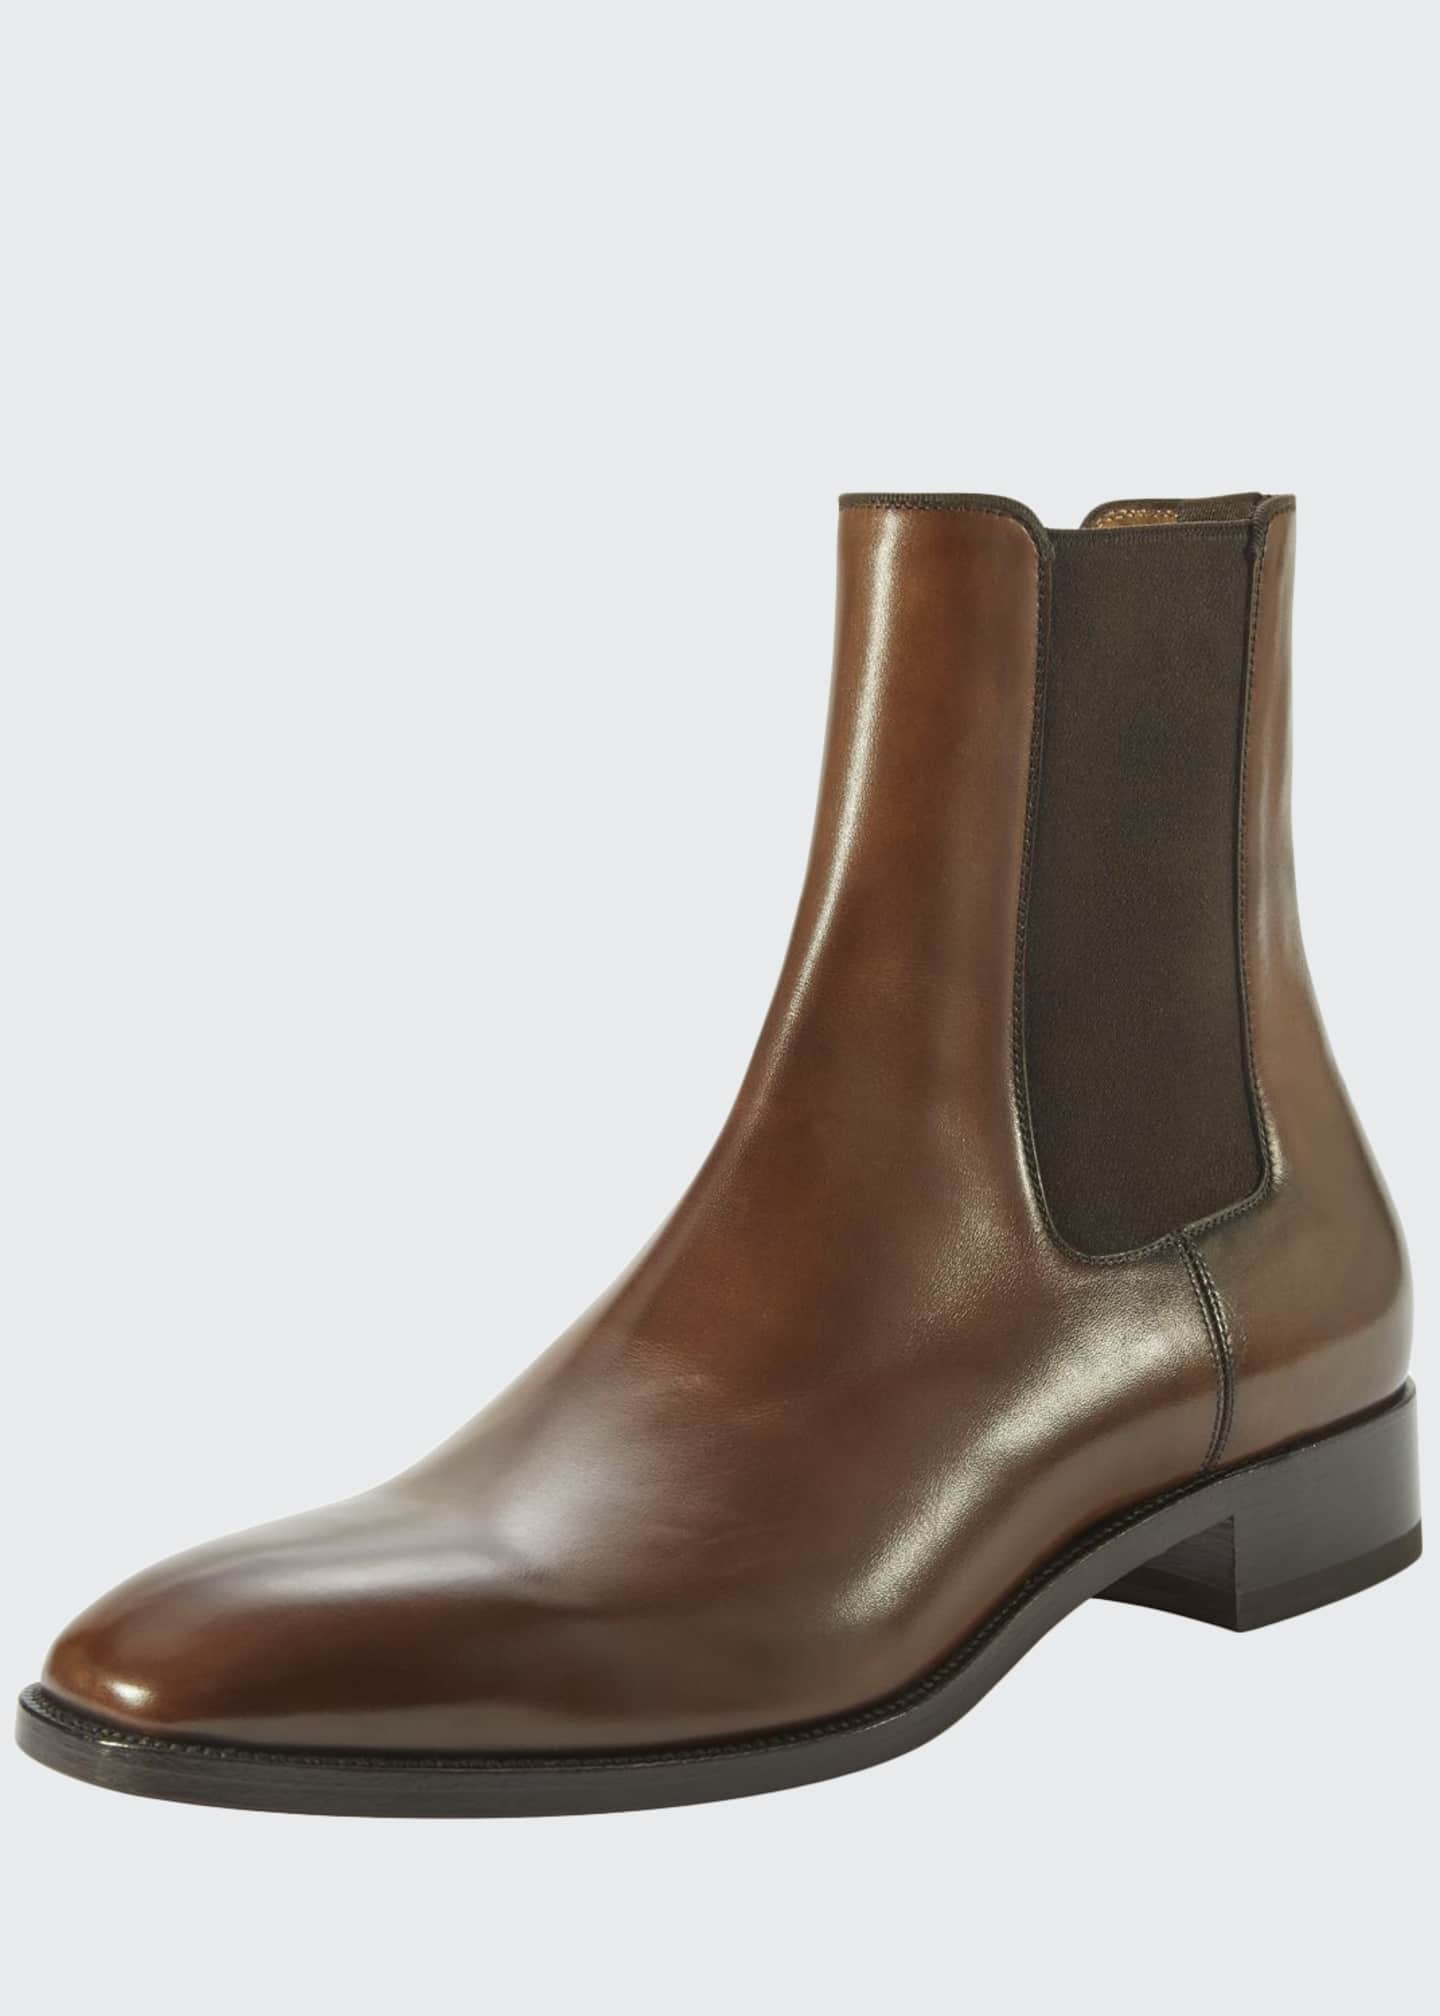 louboutin boots men